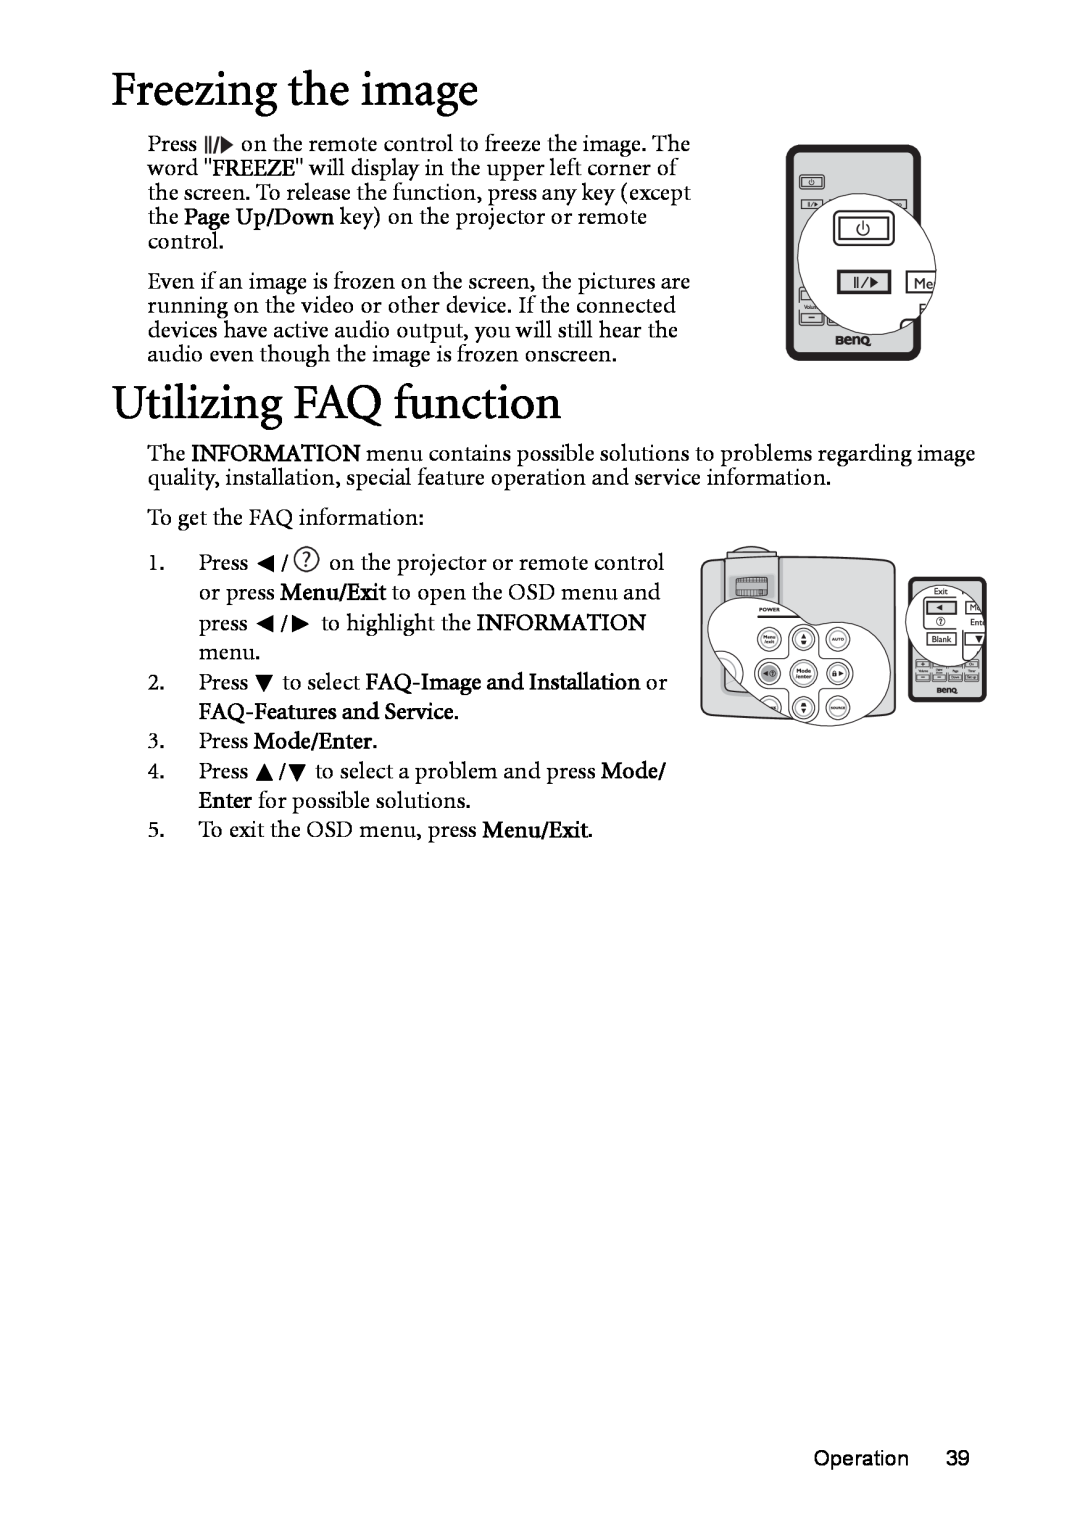 BenQ MP525 ST user manual Freezing the image, Utilizing FAQ function, Press Mode/Enter 